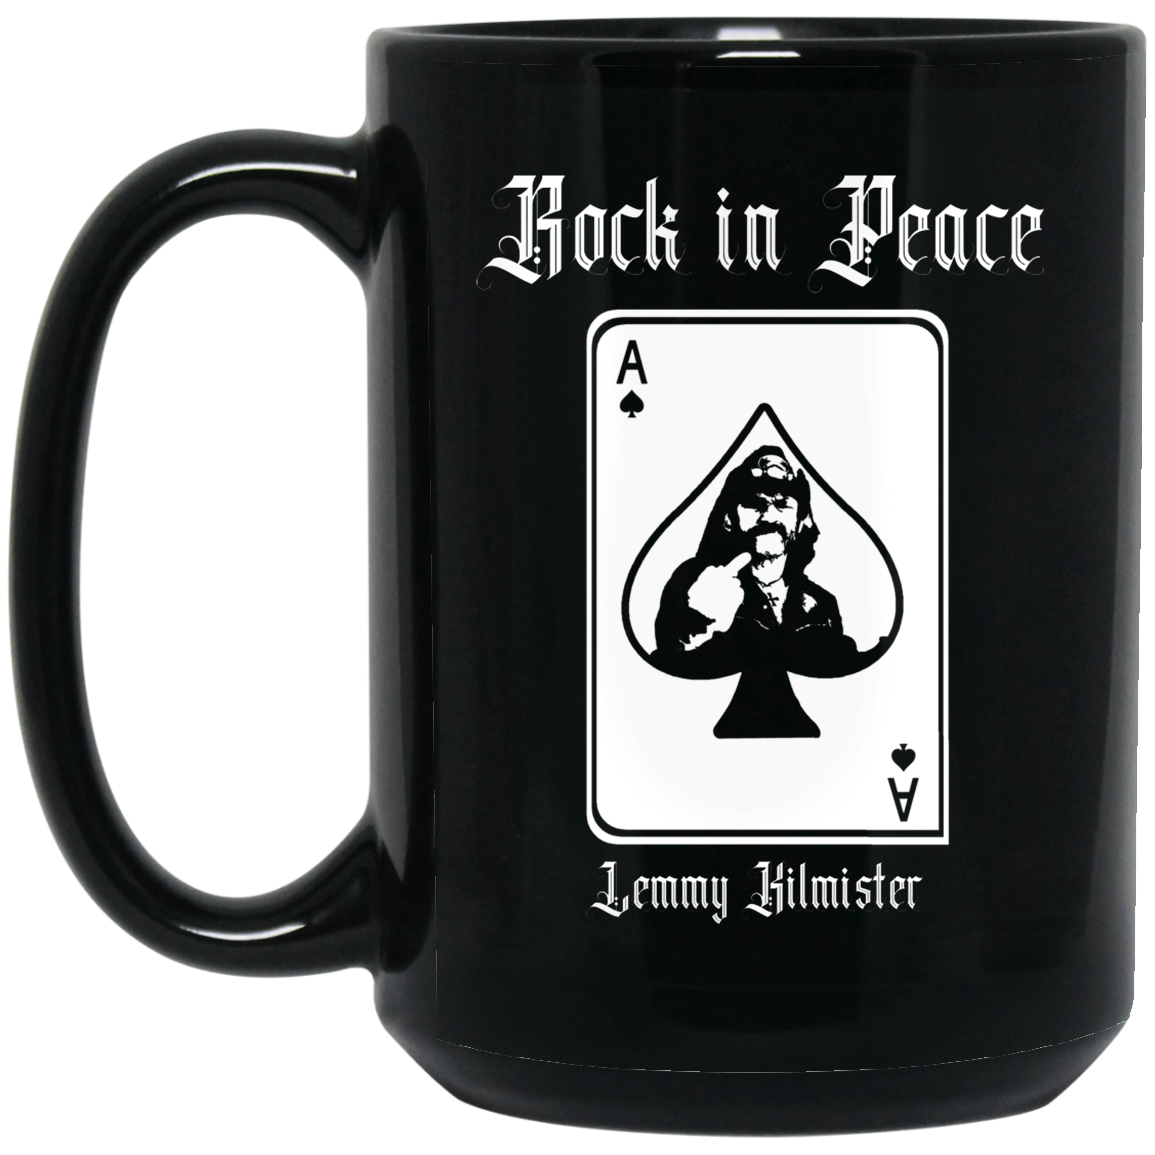 ArtichokeUSA Custom Design. Lemmy Kilmister "Ace of Spades" Tribute Fan Art Version 2 of 2. 15 oz. Black Mug